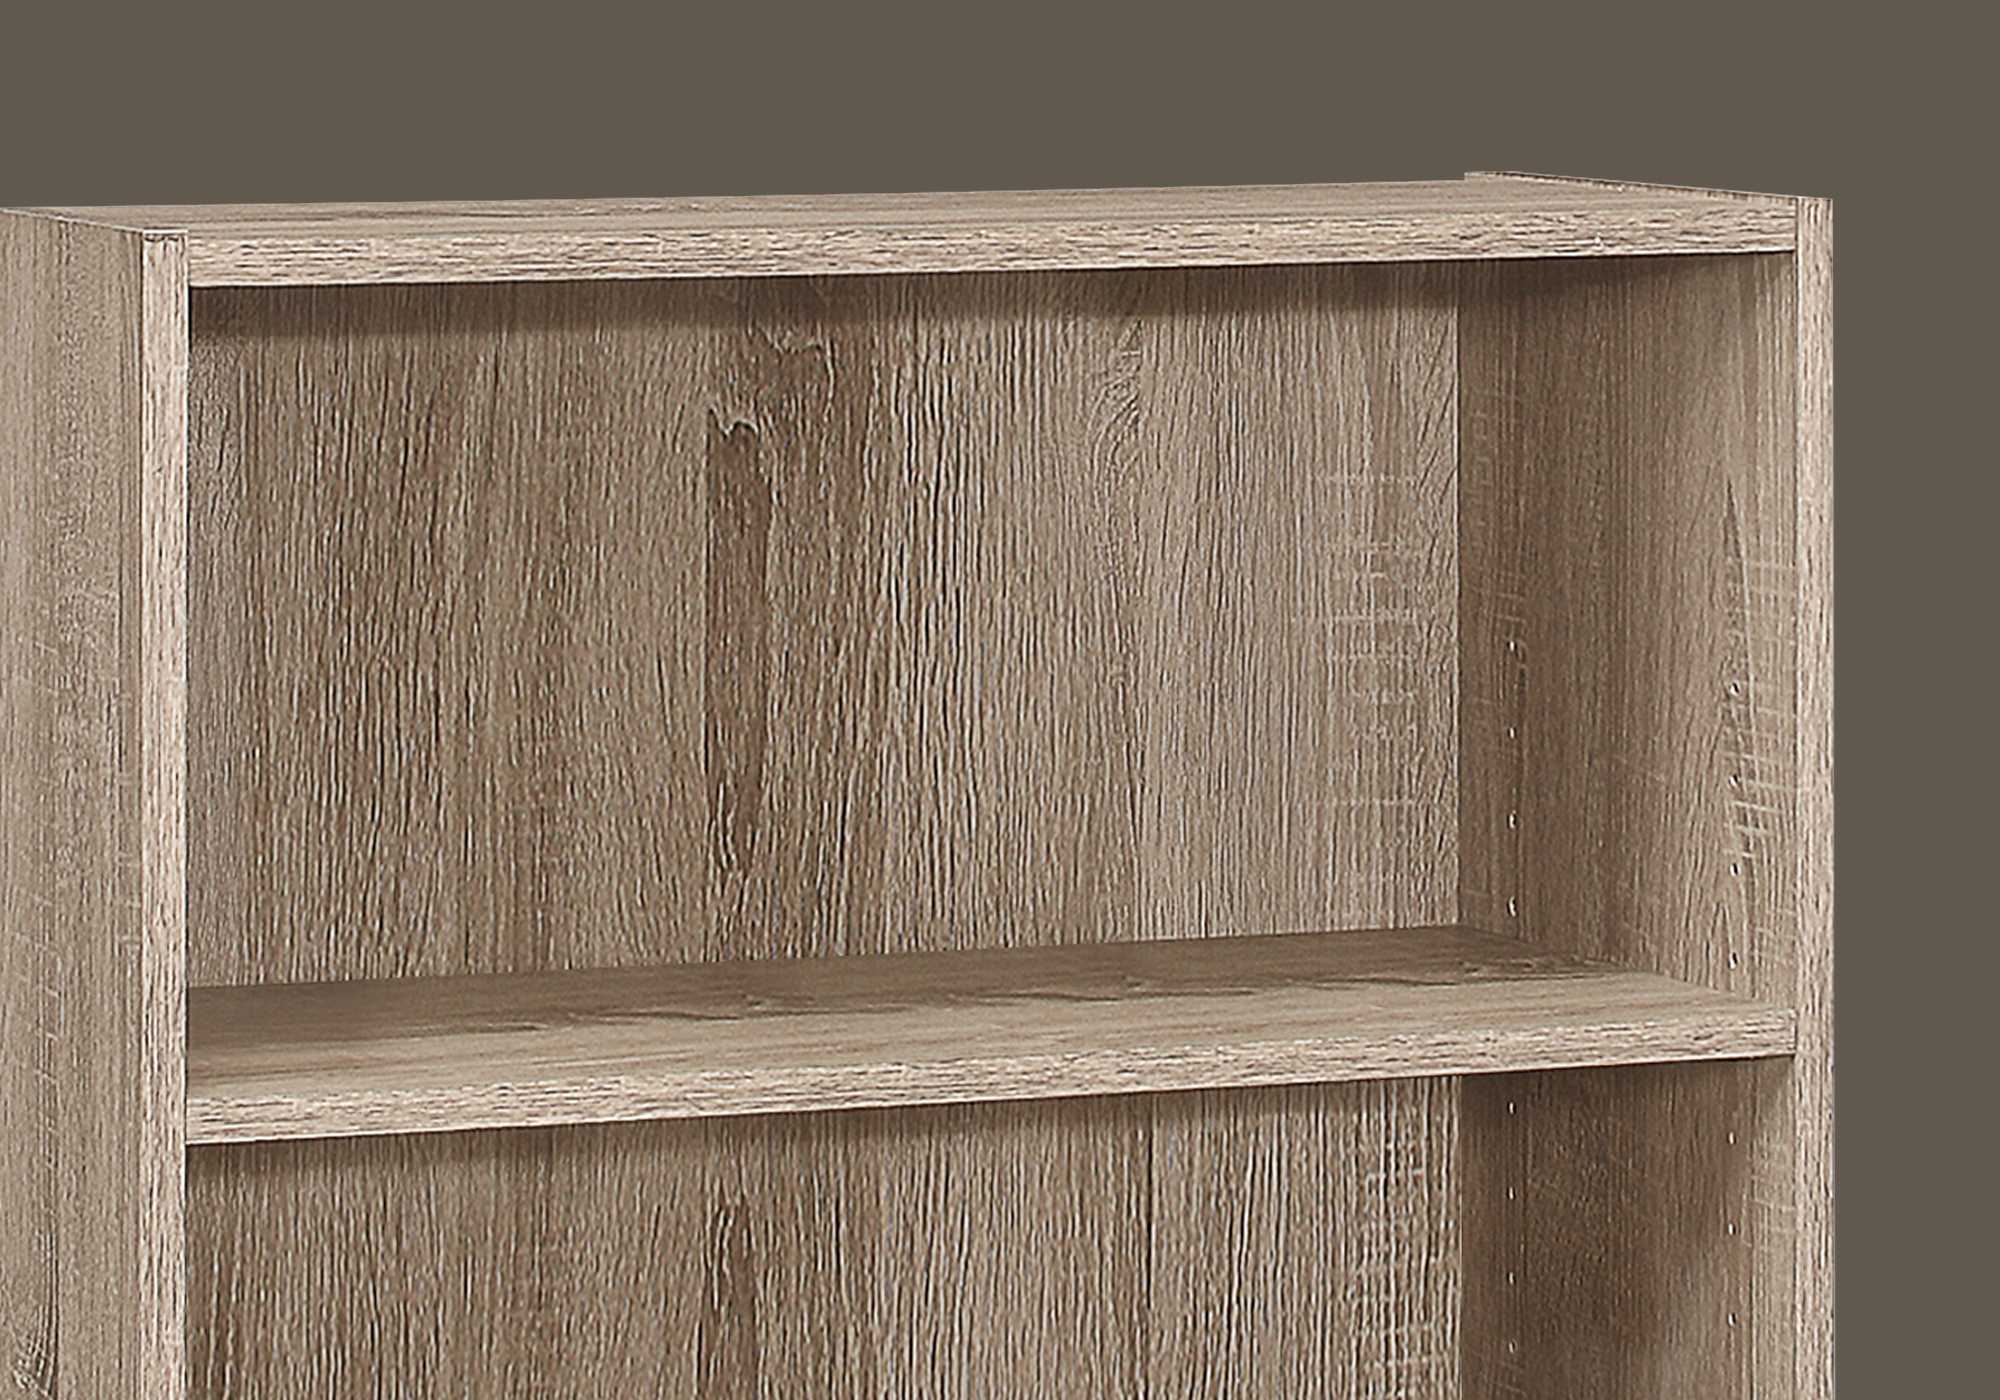 36" Taupe Wood Adjustable Bookcase